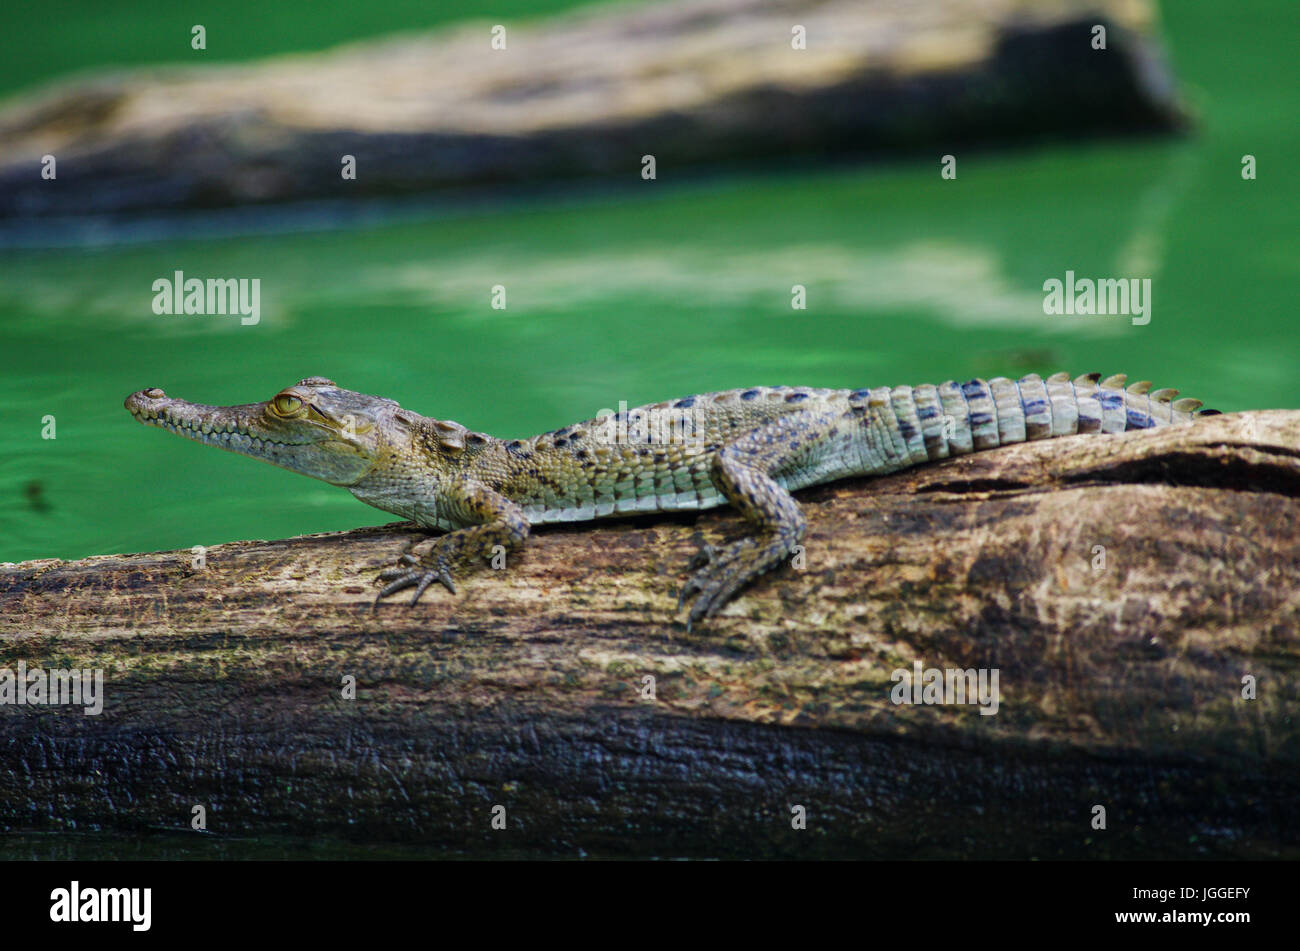 Baby crocodile on a tree strunk in a lake wildlife image taken in Panama Stock Photo